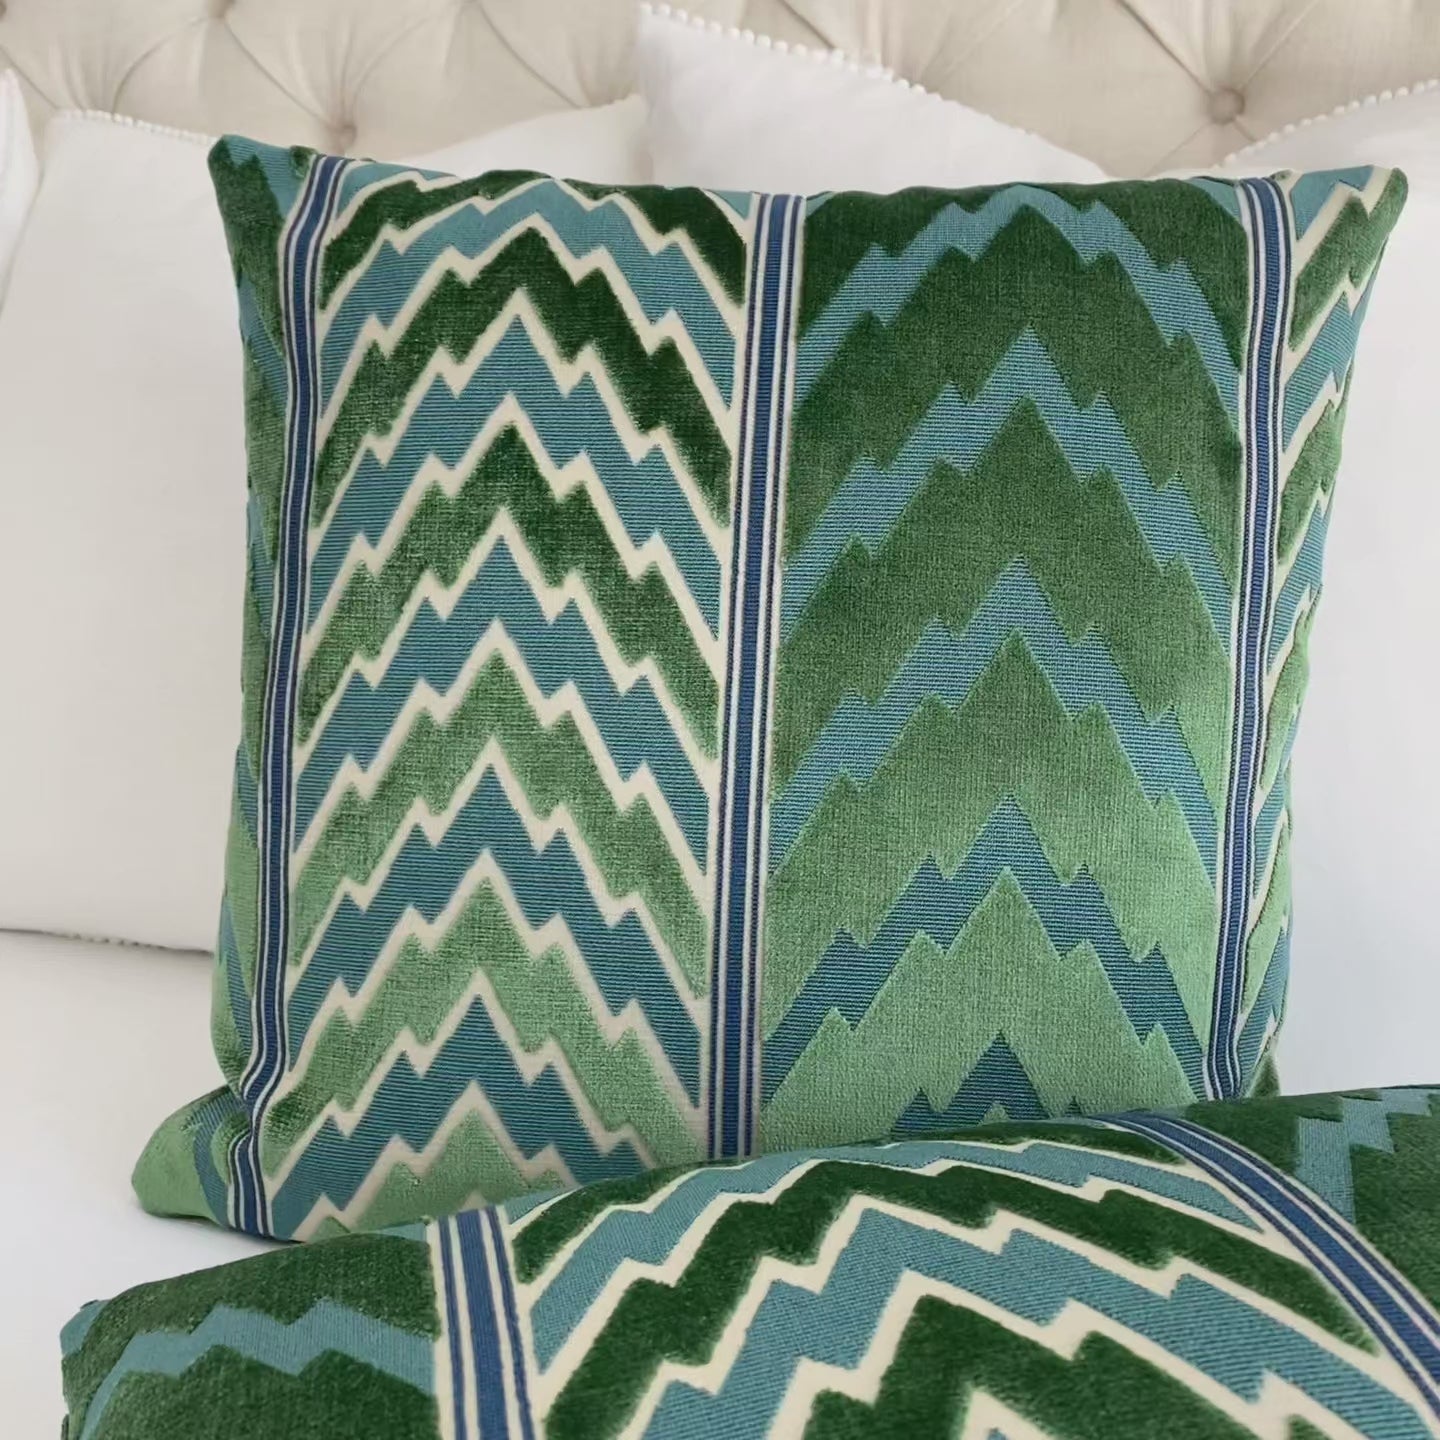 Schumacher Florentine Emerald Green Velvet Flame Stitch Designer Luxury Decorative Throw Pillow Cover Product Video